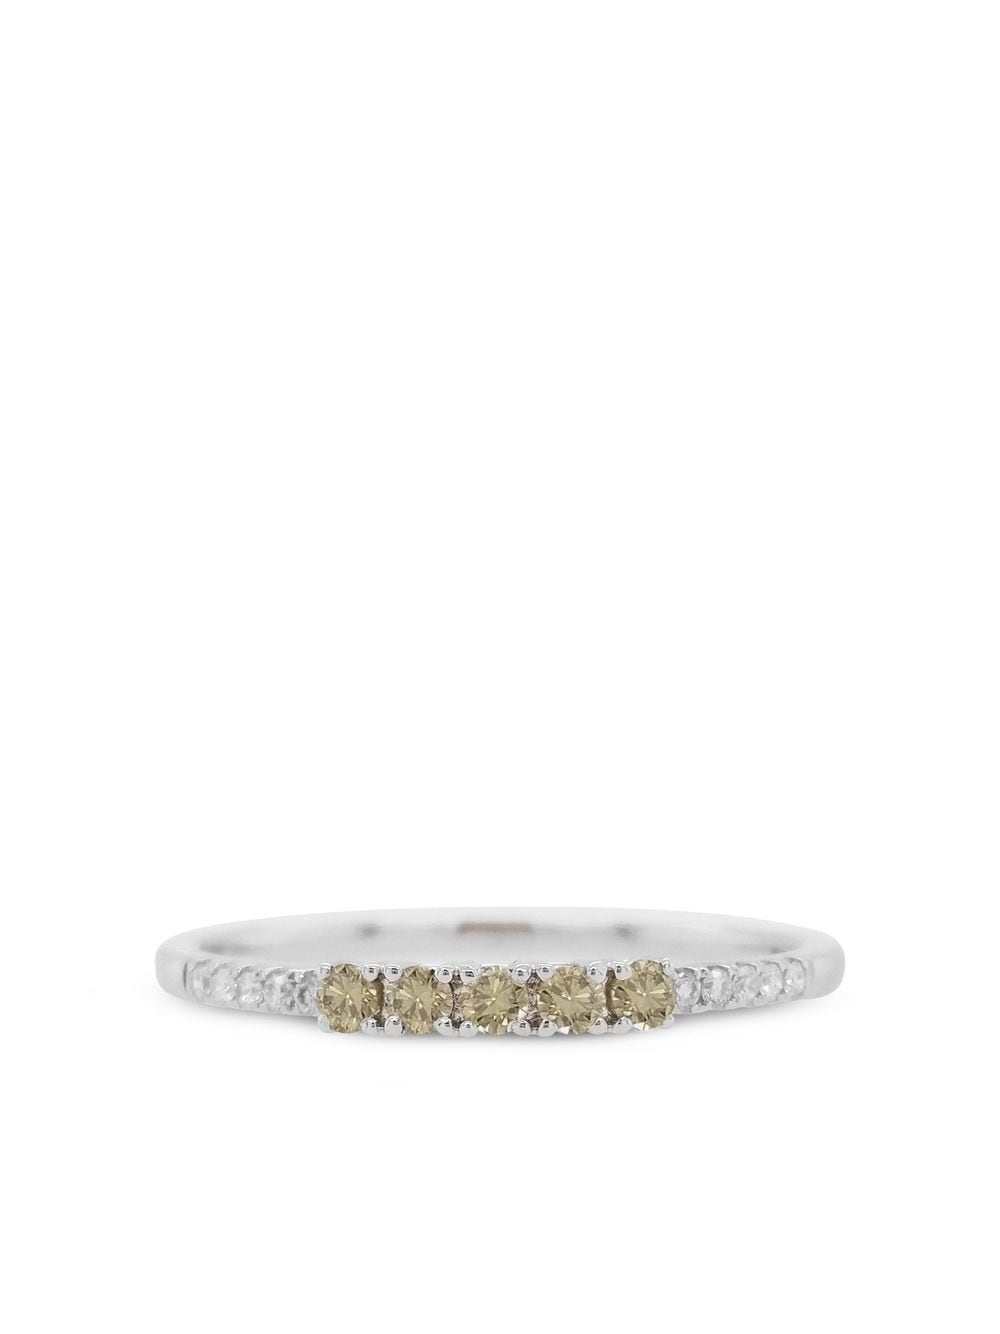 HYT Jewelry 18kt white gold diamond band ring - Silver von HYT Jewelry